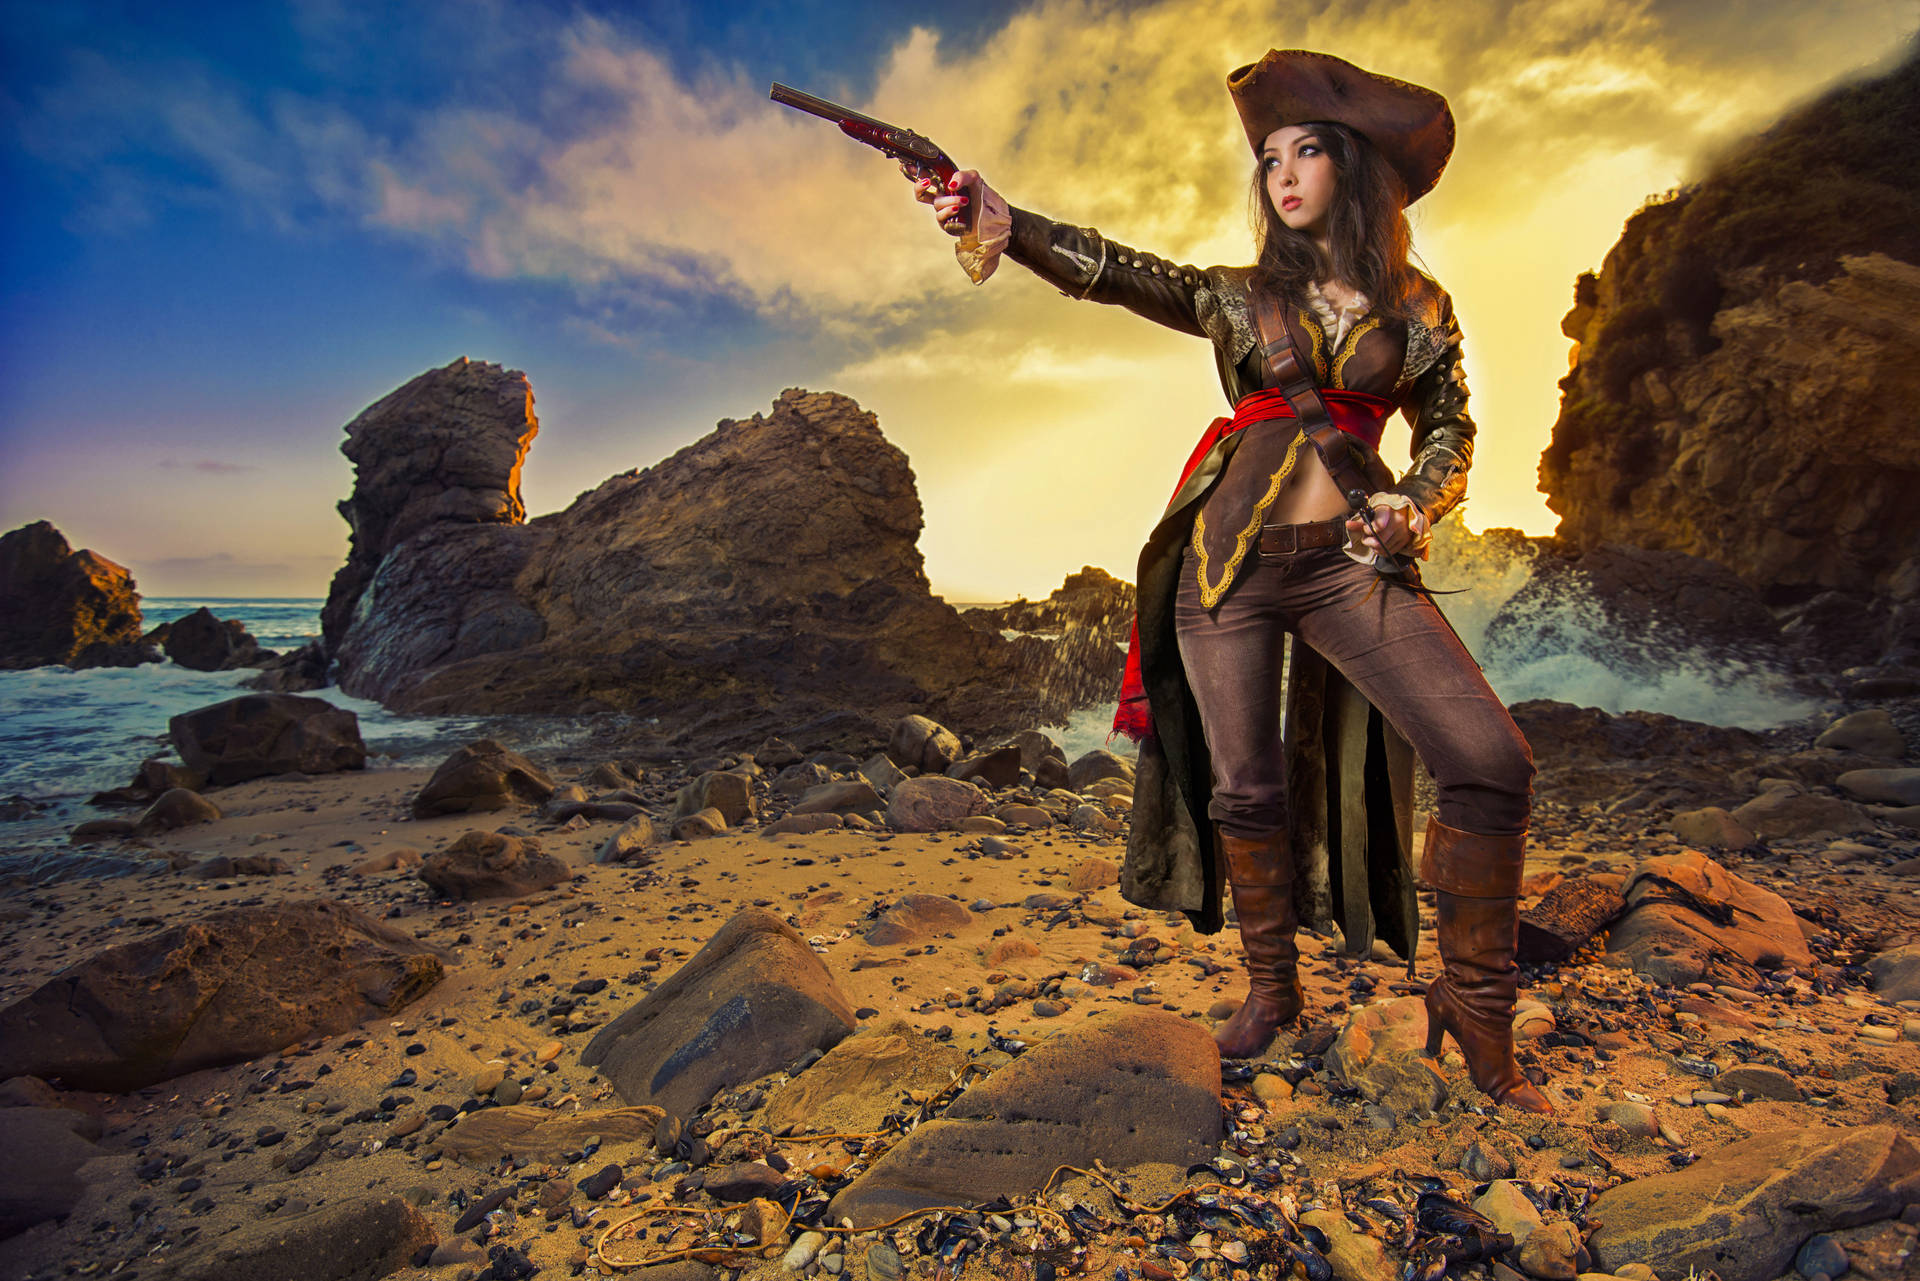 Pirate Woman Photography